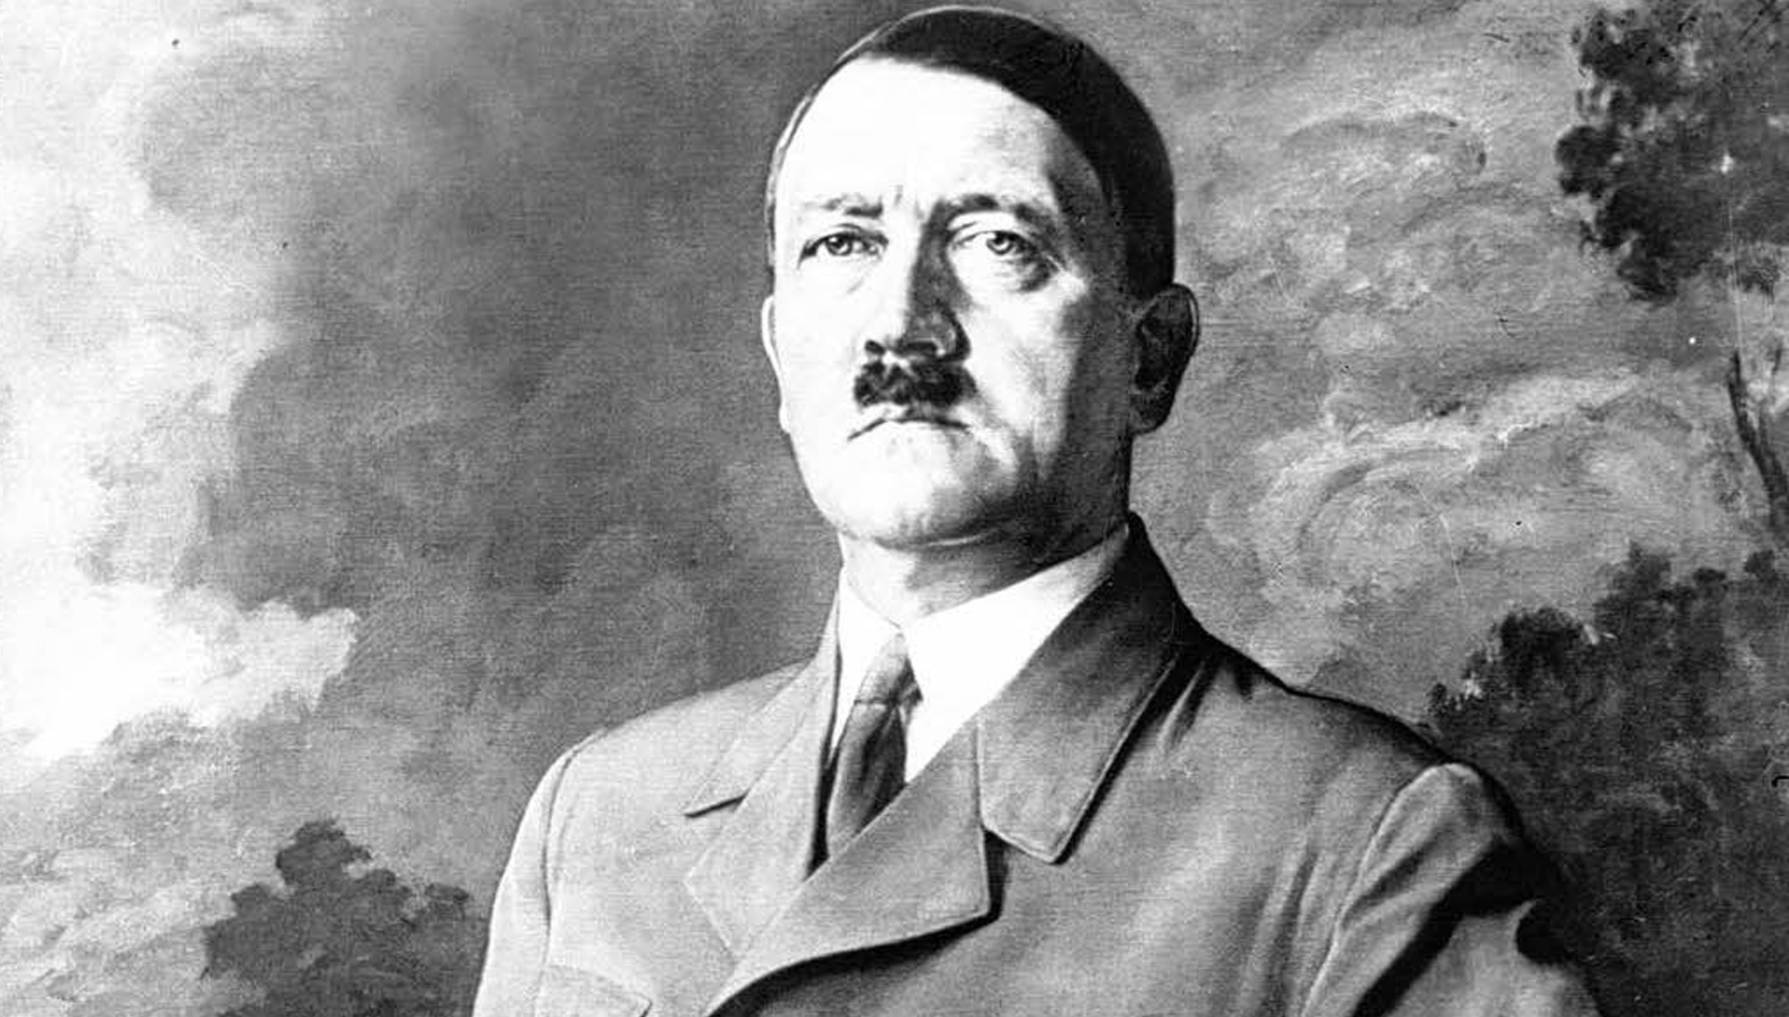 La voz de Hitler